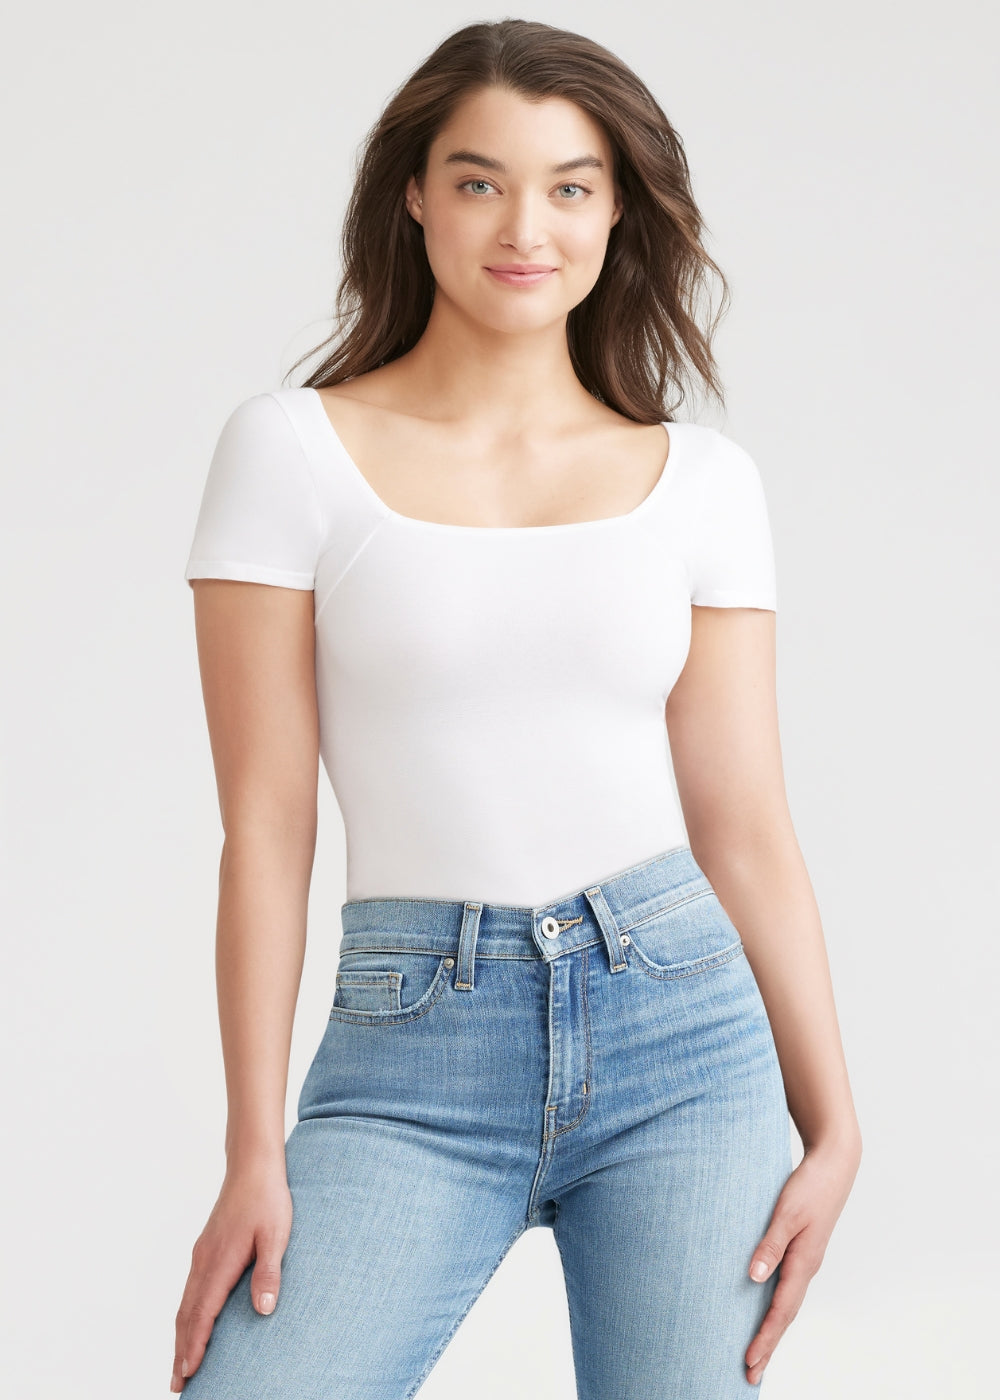 Yummie 37903 Womens White Geri Shaping Convertible Bodysuit Size  Medium/Large